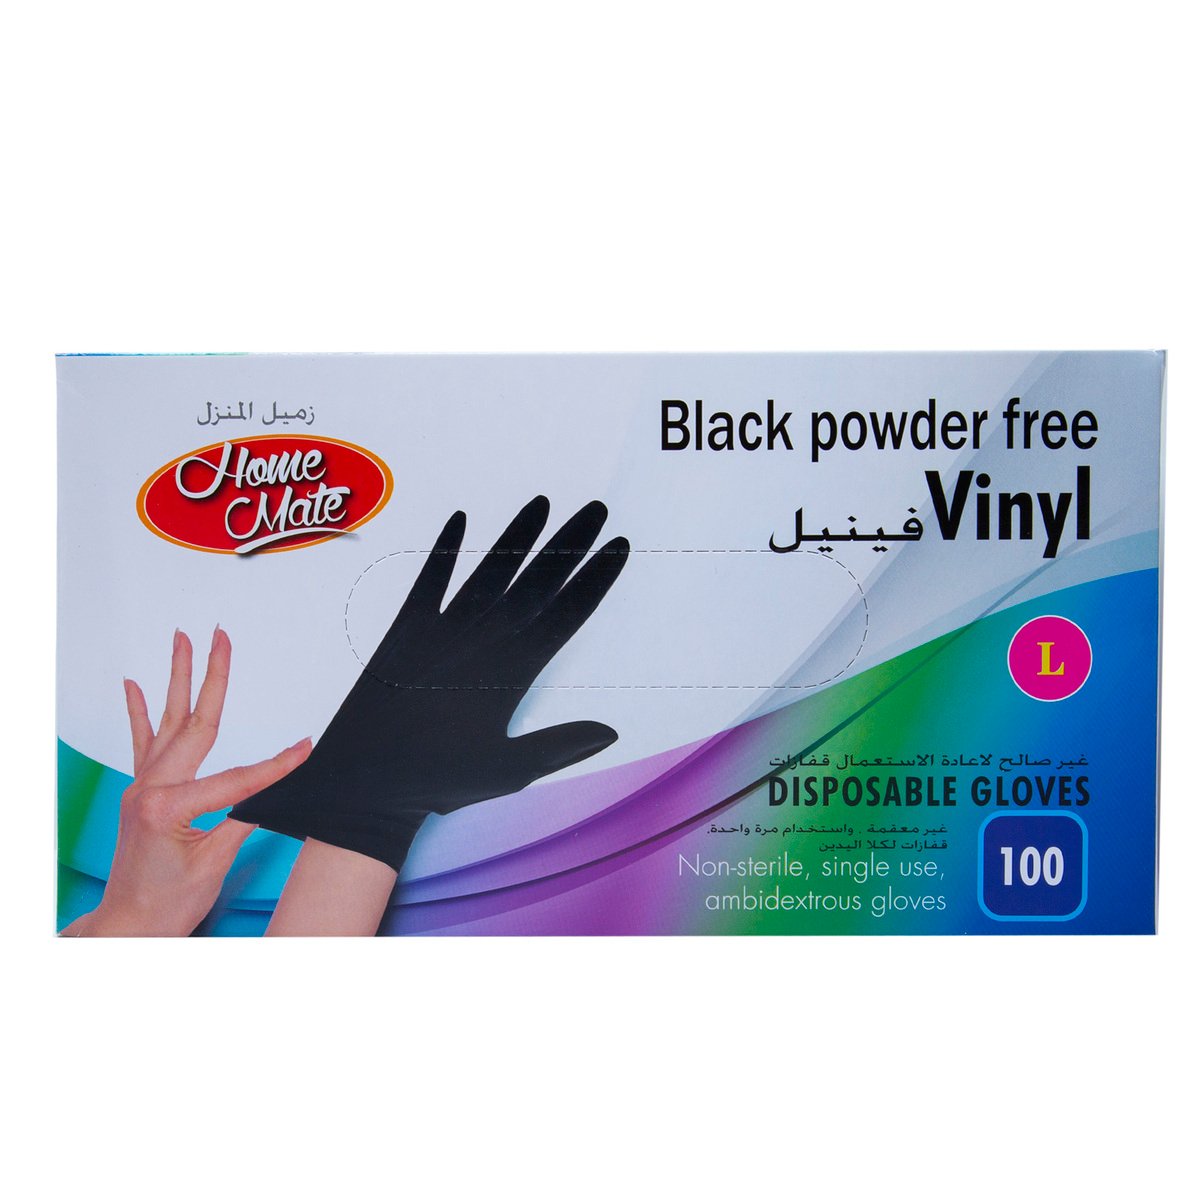 Home Mate Vinyl Disposable Gloves Black Powder Free Large 100pcs